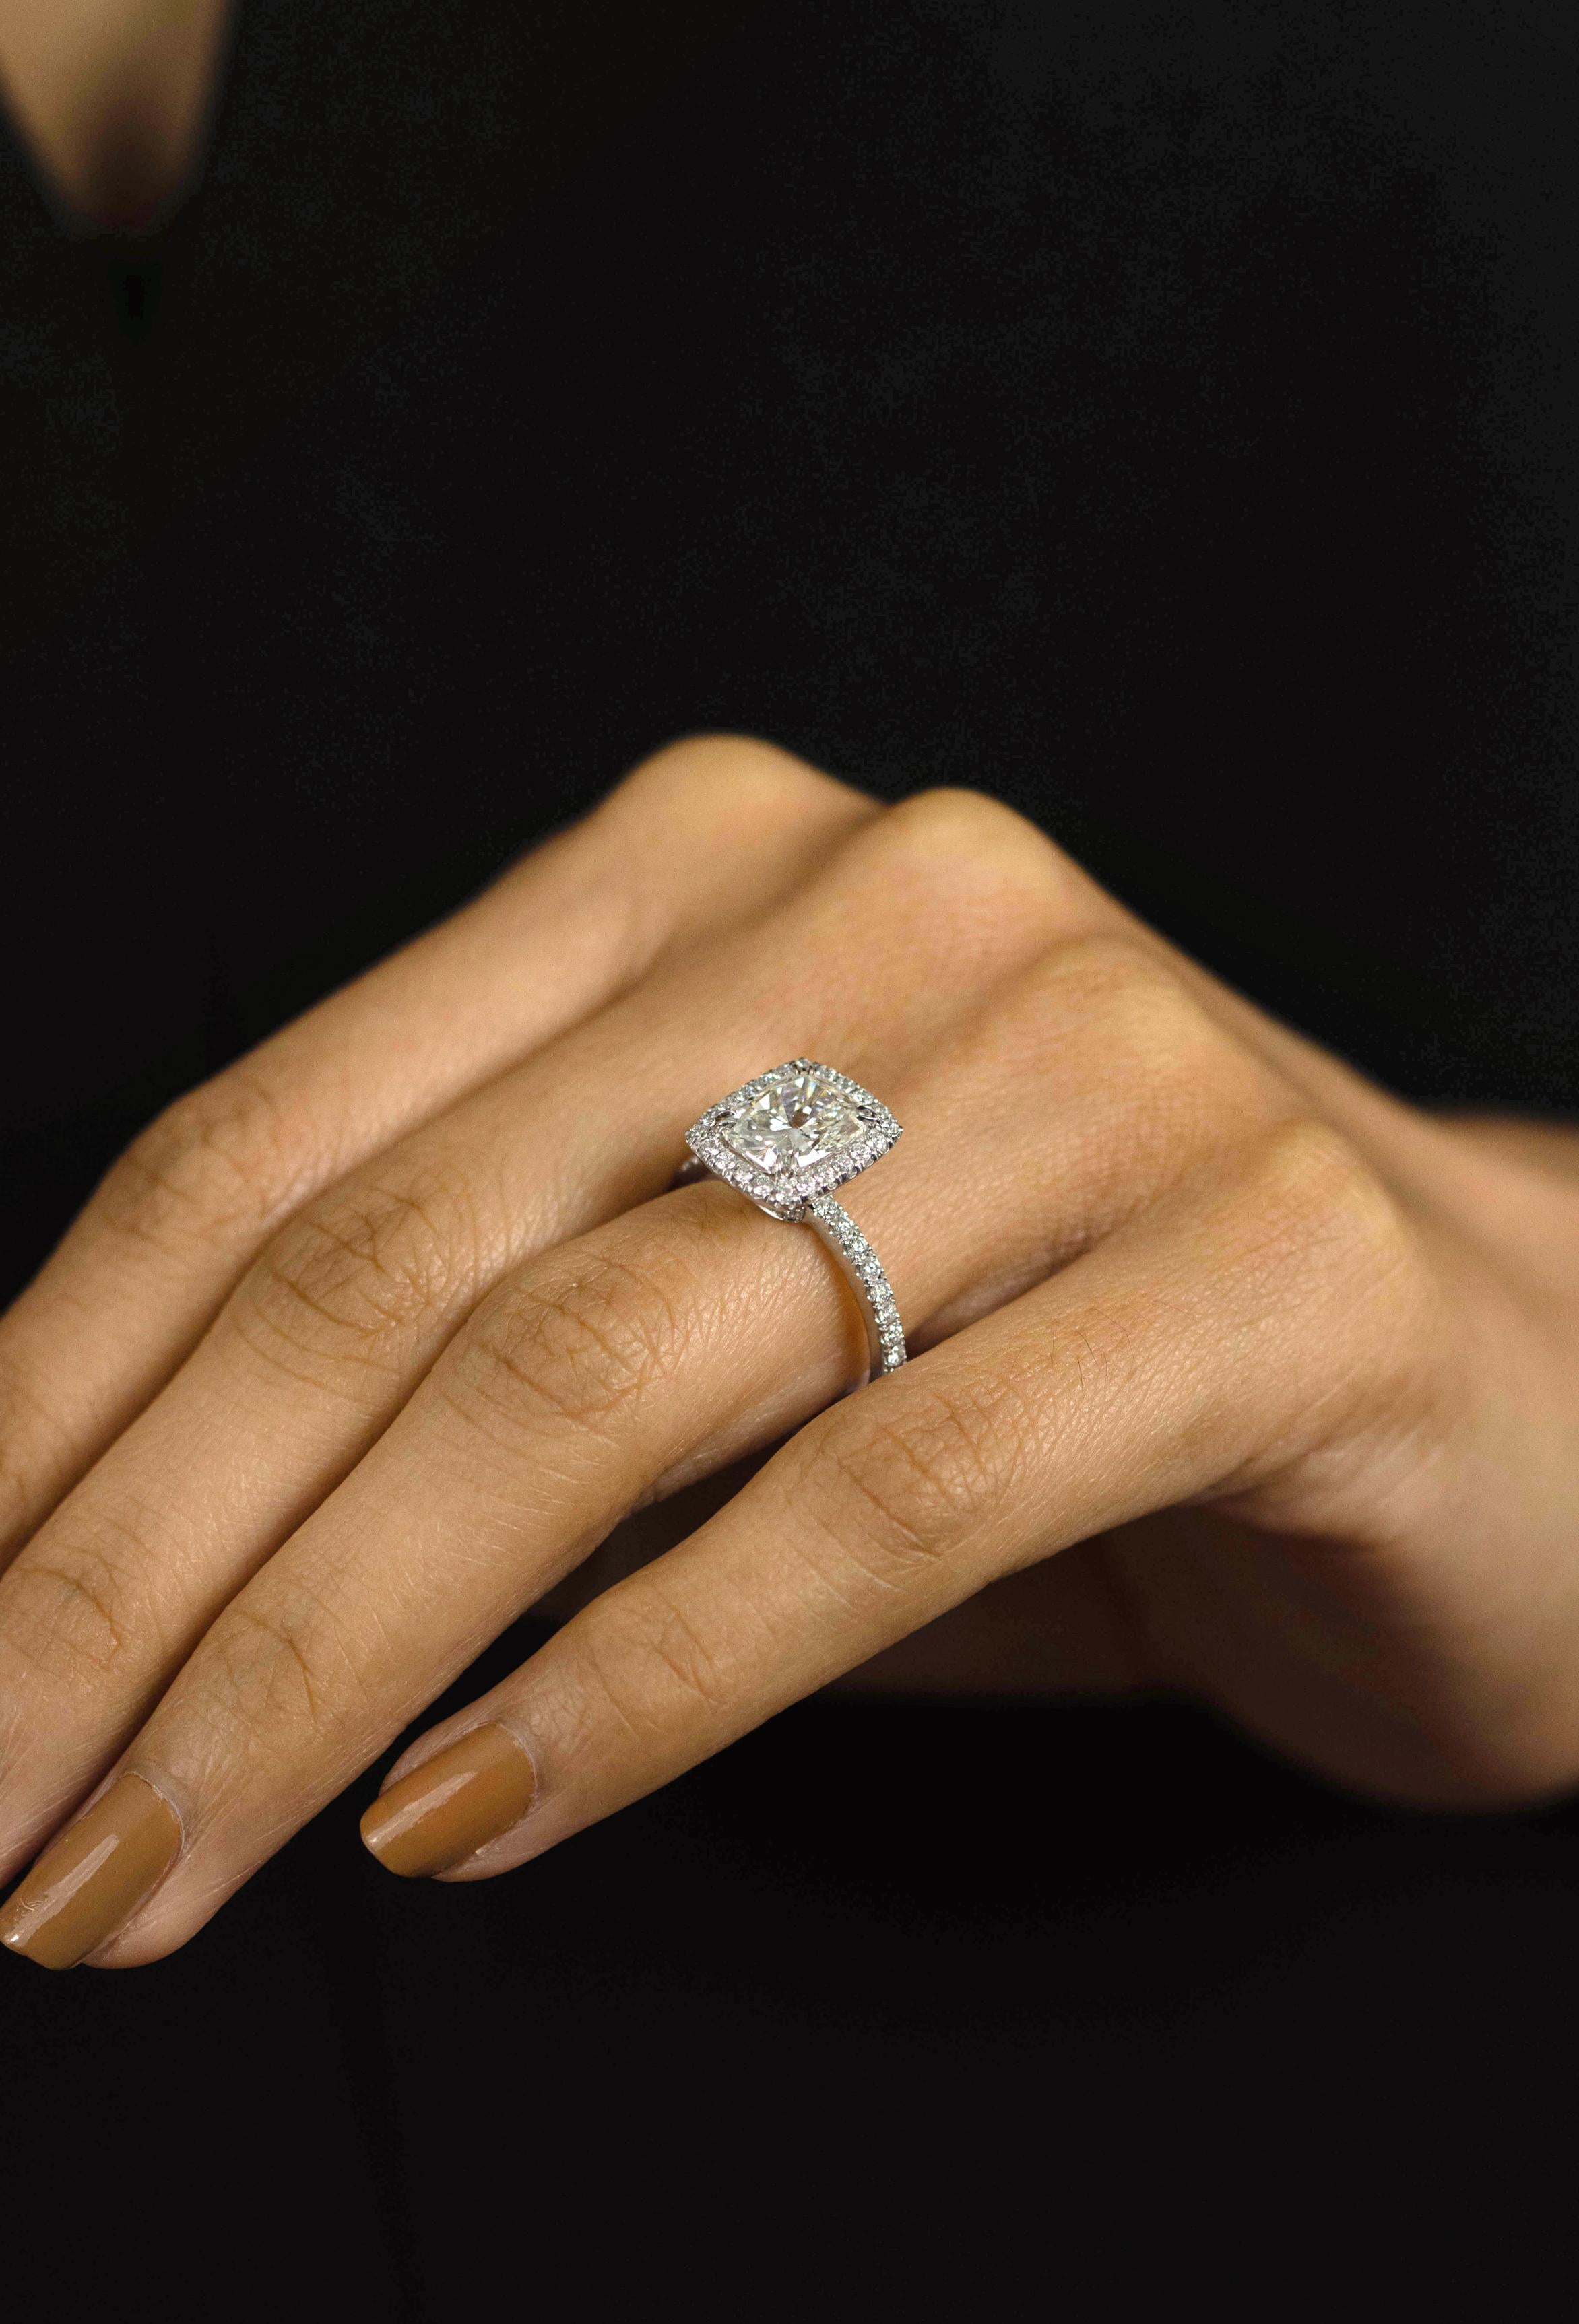 $30 000 engagement ring